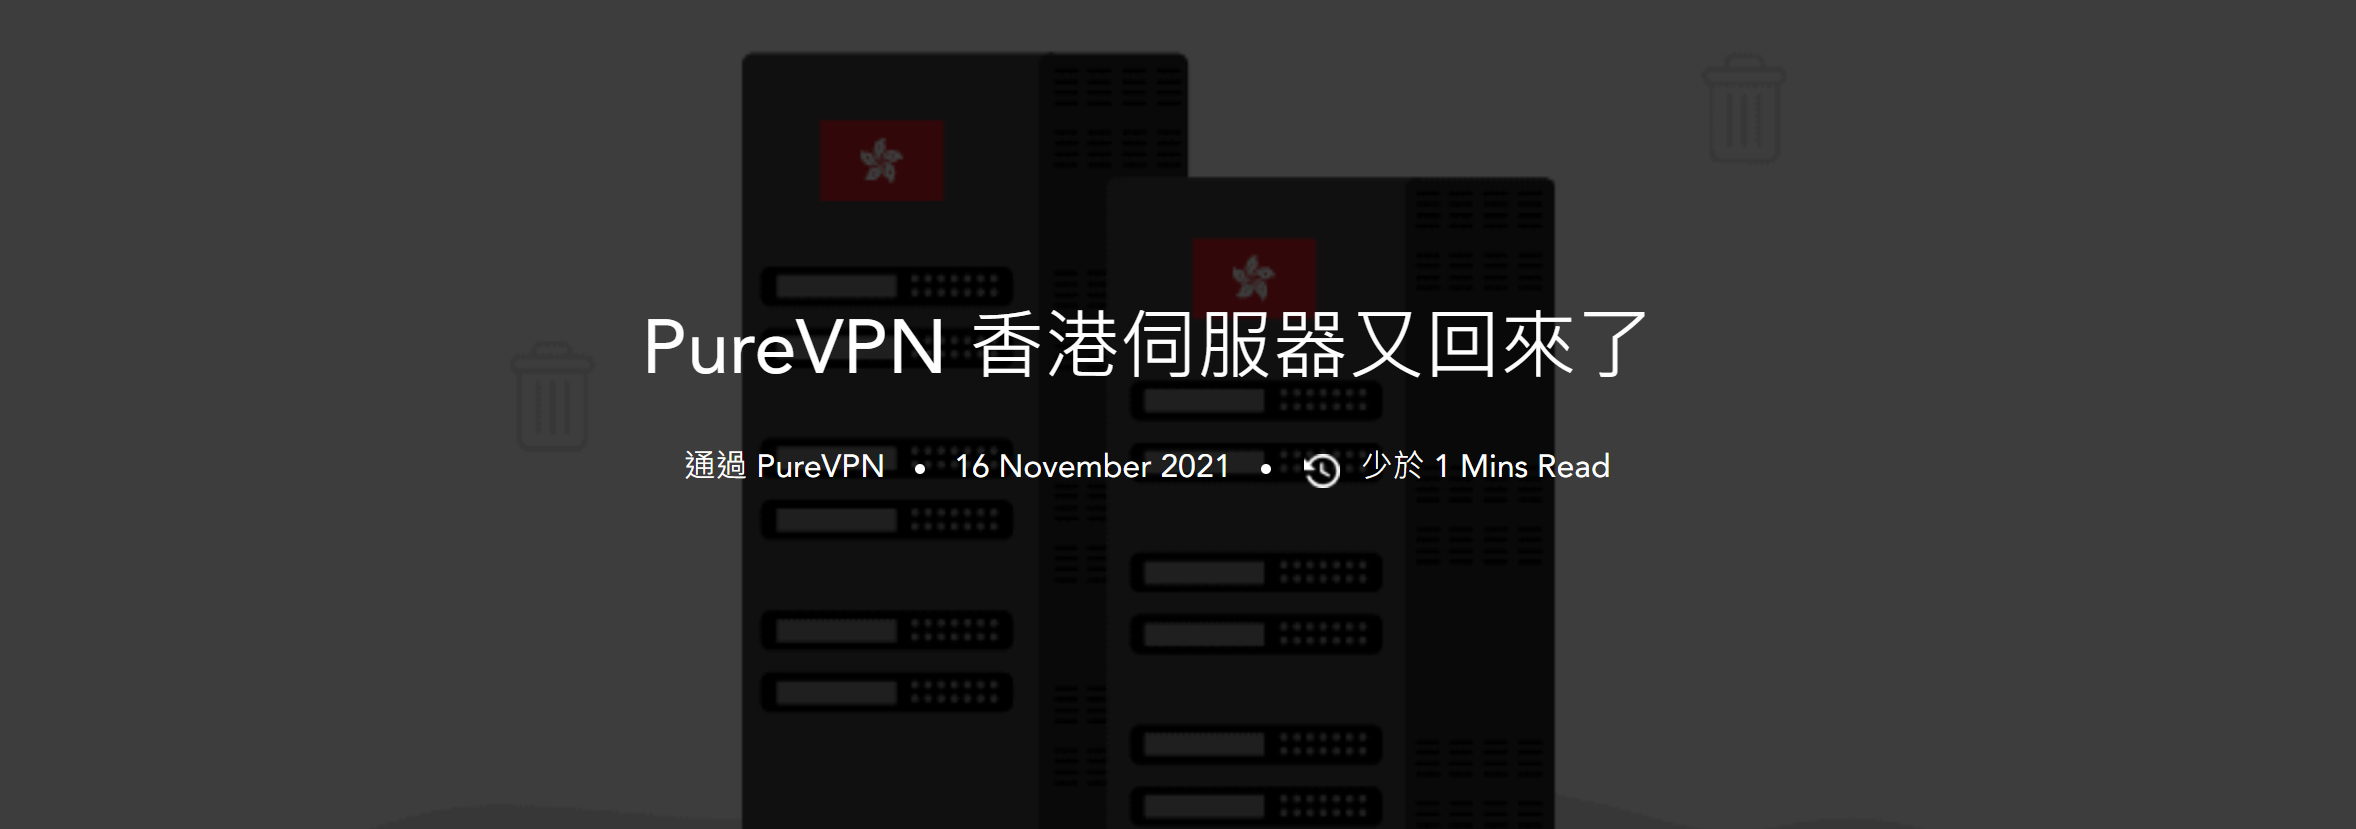 【PureVPN】2021聖誕優惠，看Netflix，Disney+追劇必備，享受超音速20G伺服器服務。 - vpn怎麼用, purevpn中資, purevpn中國, vpn免安裝, vpn下載, vpn是什麼, vpn日本, vpn中國, vpn電腦, vpn台灣, PureVPN 評價, PureVPN 評測心得, PureVPN評價如何, PureVPN優惠碼, 折購碼, PureVPN折扣, PureVPN優惠, PureVPN折扣碼, PureVPN台灣折扣碼, PureVPN download, 追劇, 台灣, NETFLIX, 優惠碼, 優惠, PureVPN, VPN, purevpn下載, purevpn台灣, purevpn評價, purevpn教學, purevpn退款, 折扣碼, 雙十, 國慶, VPN優惠 - 敗家達人推薦